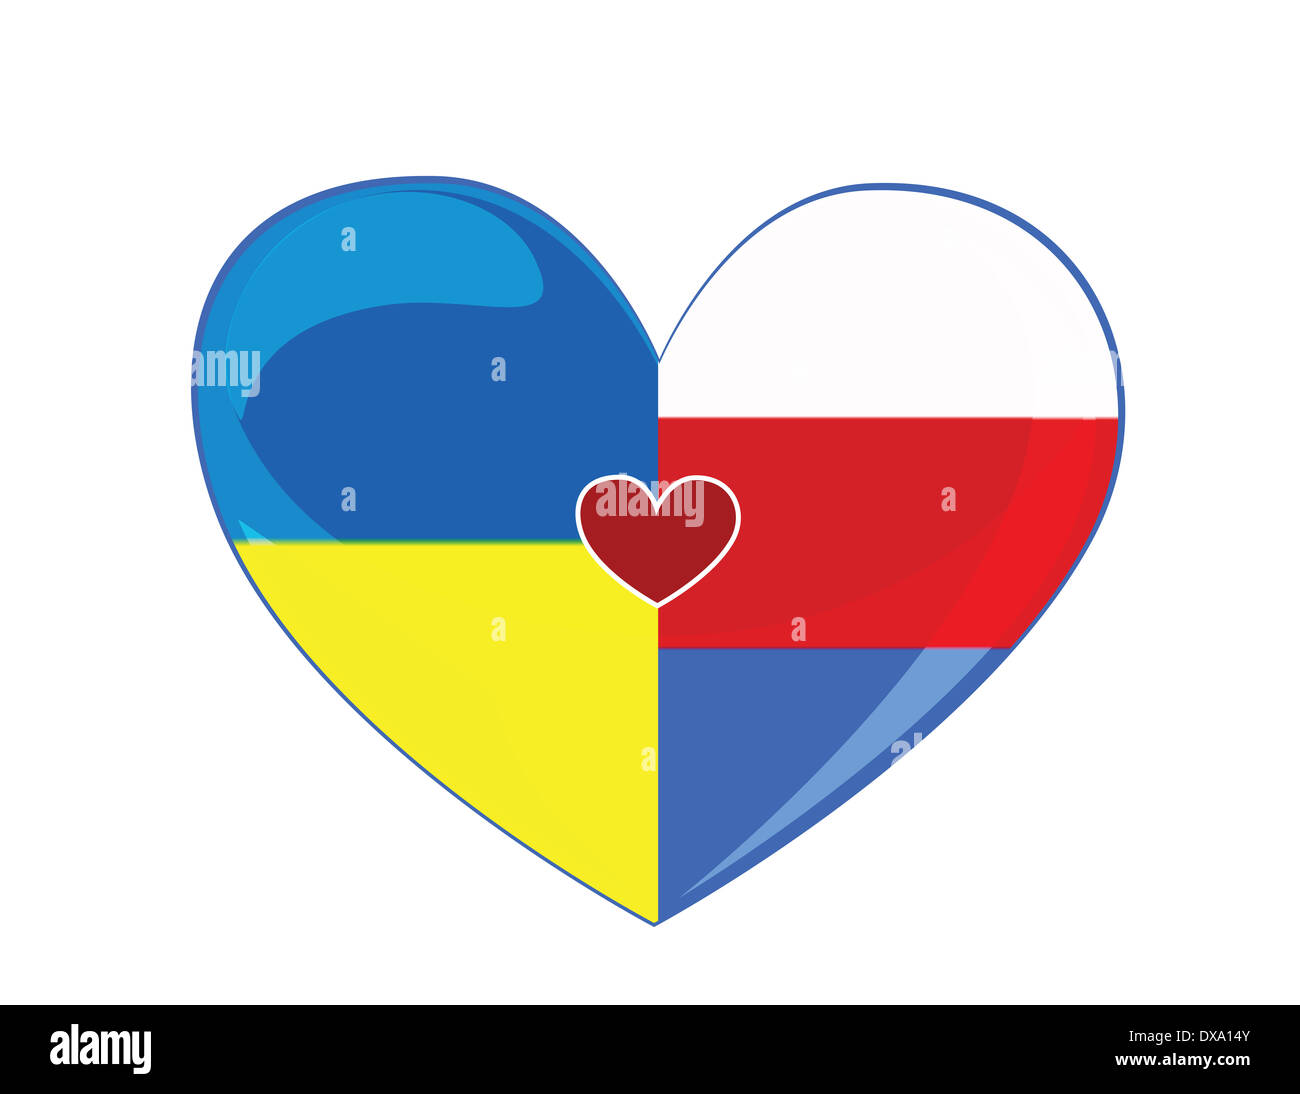 Symbols friendship between Russia and Ukraine Stock Photo